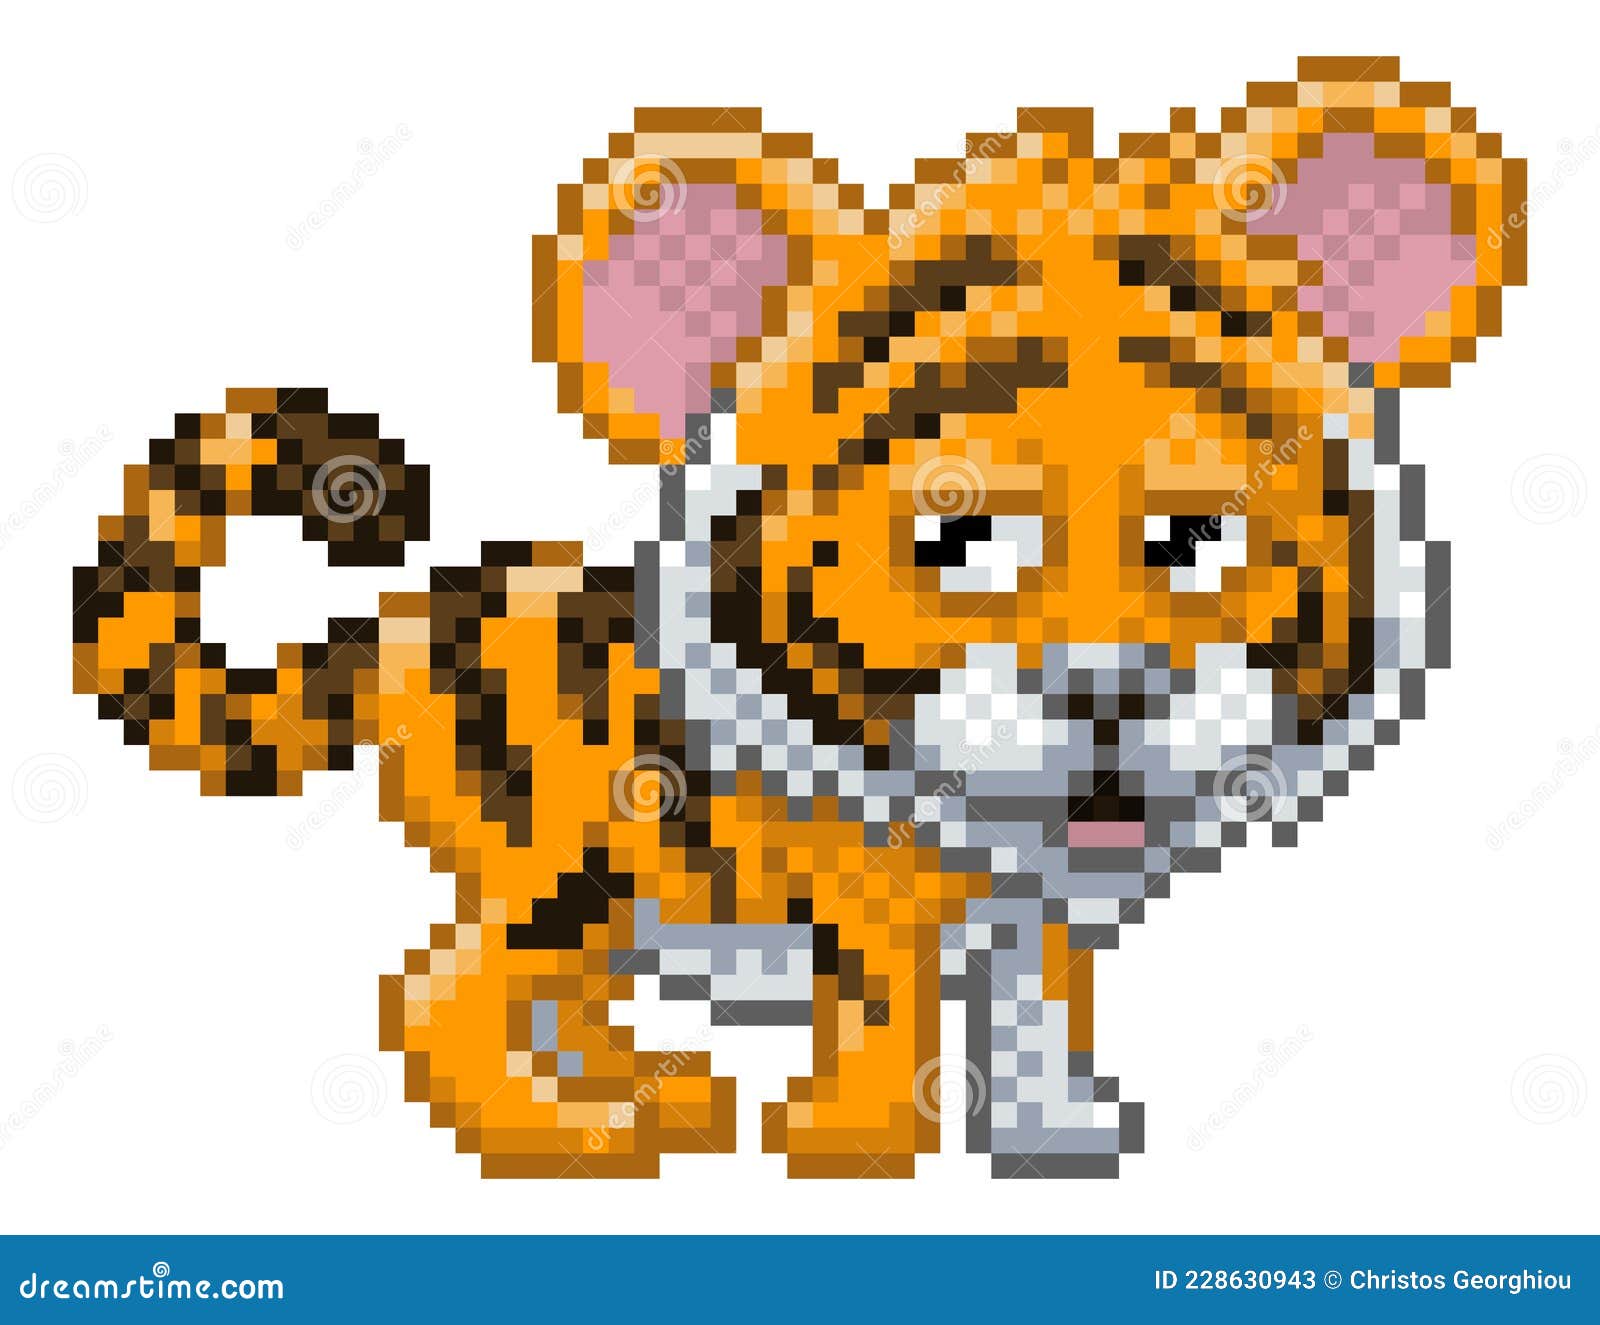 Tiger Pixel Art Safari Animal Video Game Cartoon Stock Vector -  Illustration of bitmap, background: 228630943